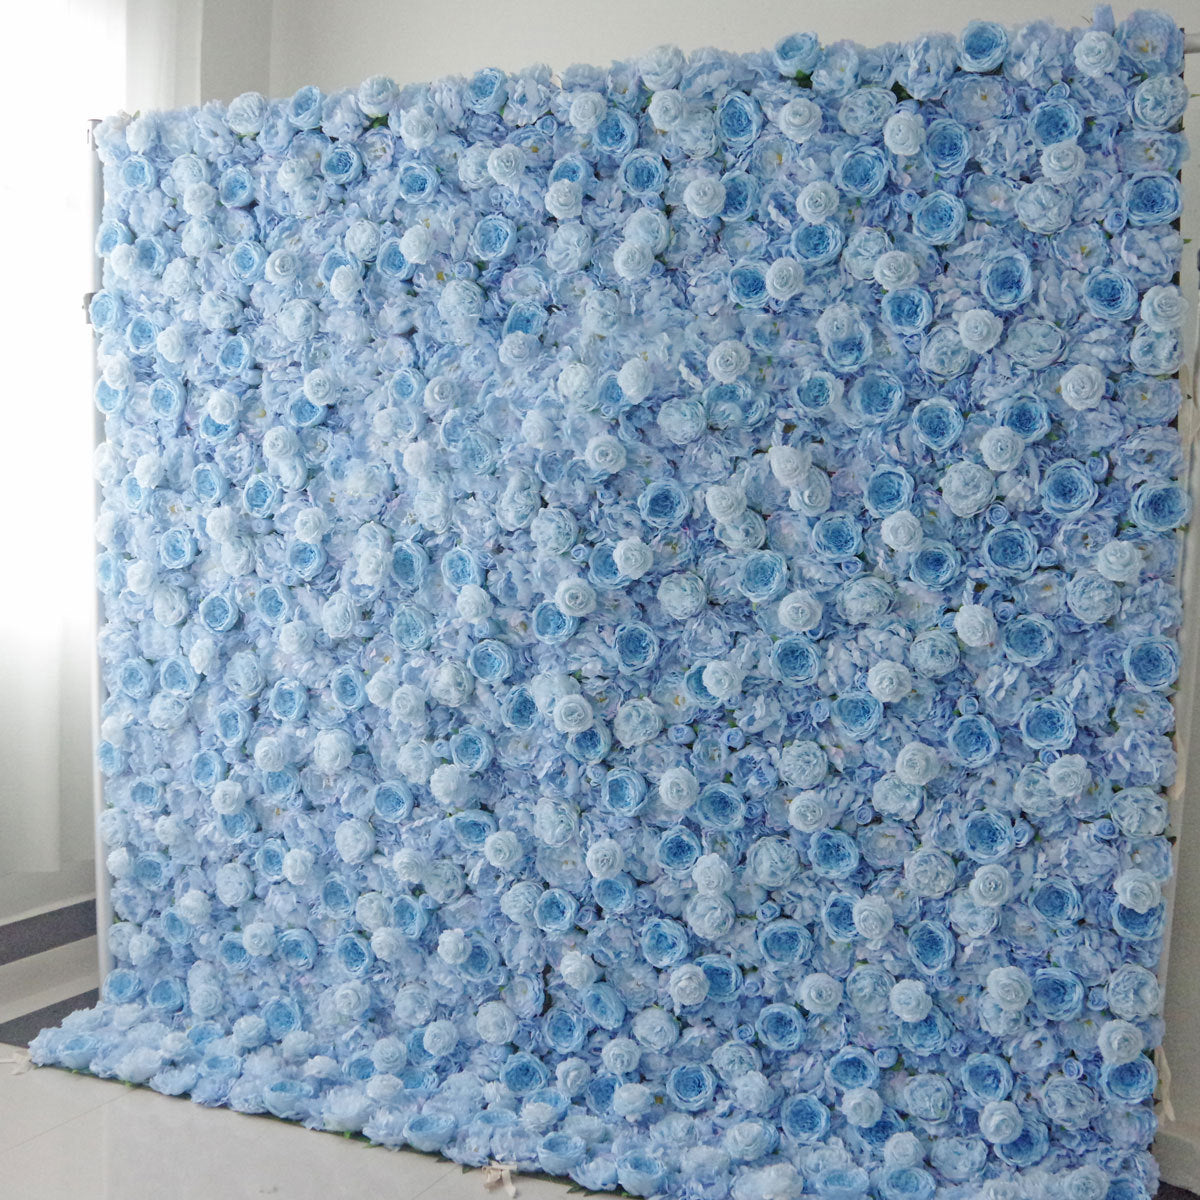 3D Artificial Flower Wall Arrangement Wedding Party Birthday Backdrop Decor HQ1152